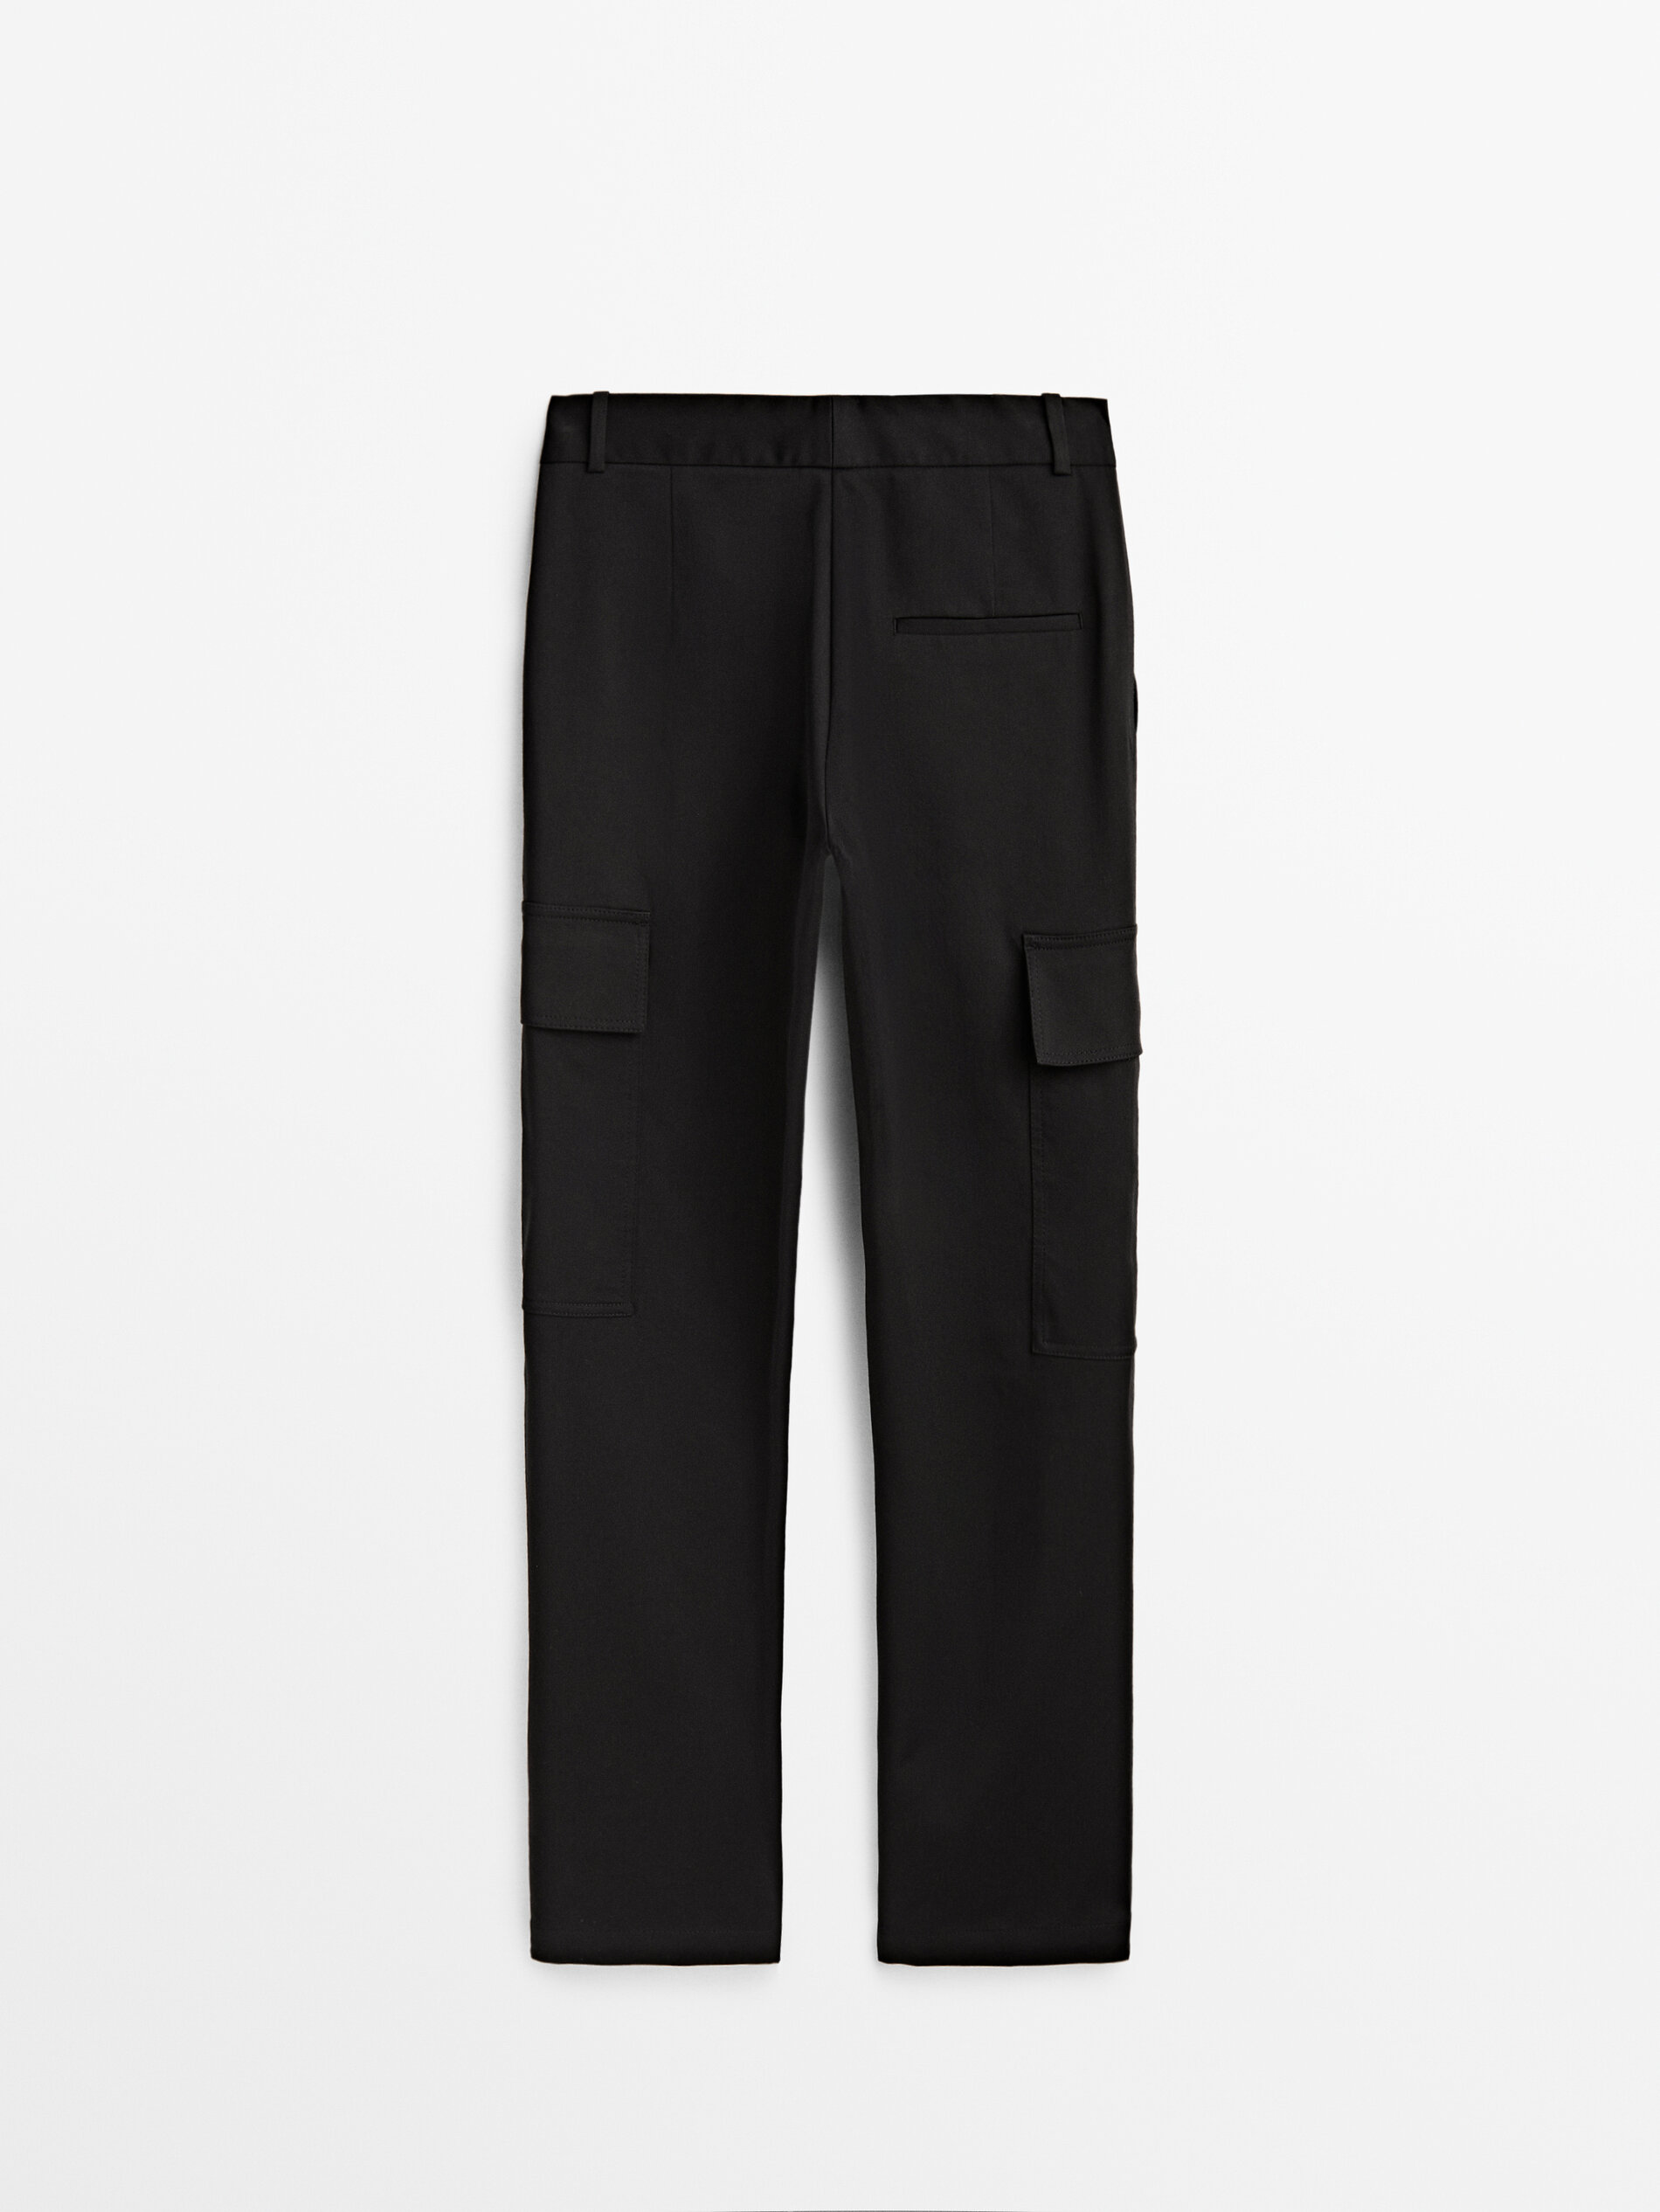 Buy Black Trousers  Pants for Men by Chelsea King Online  Ajiocom